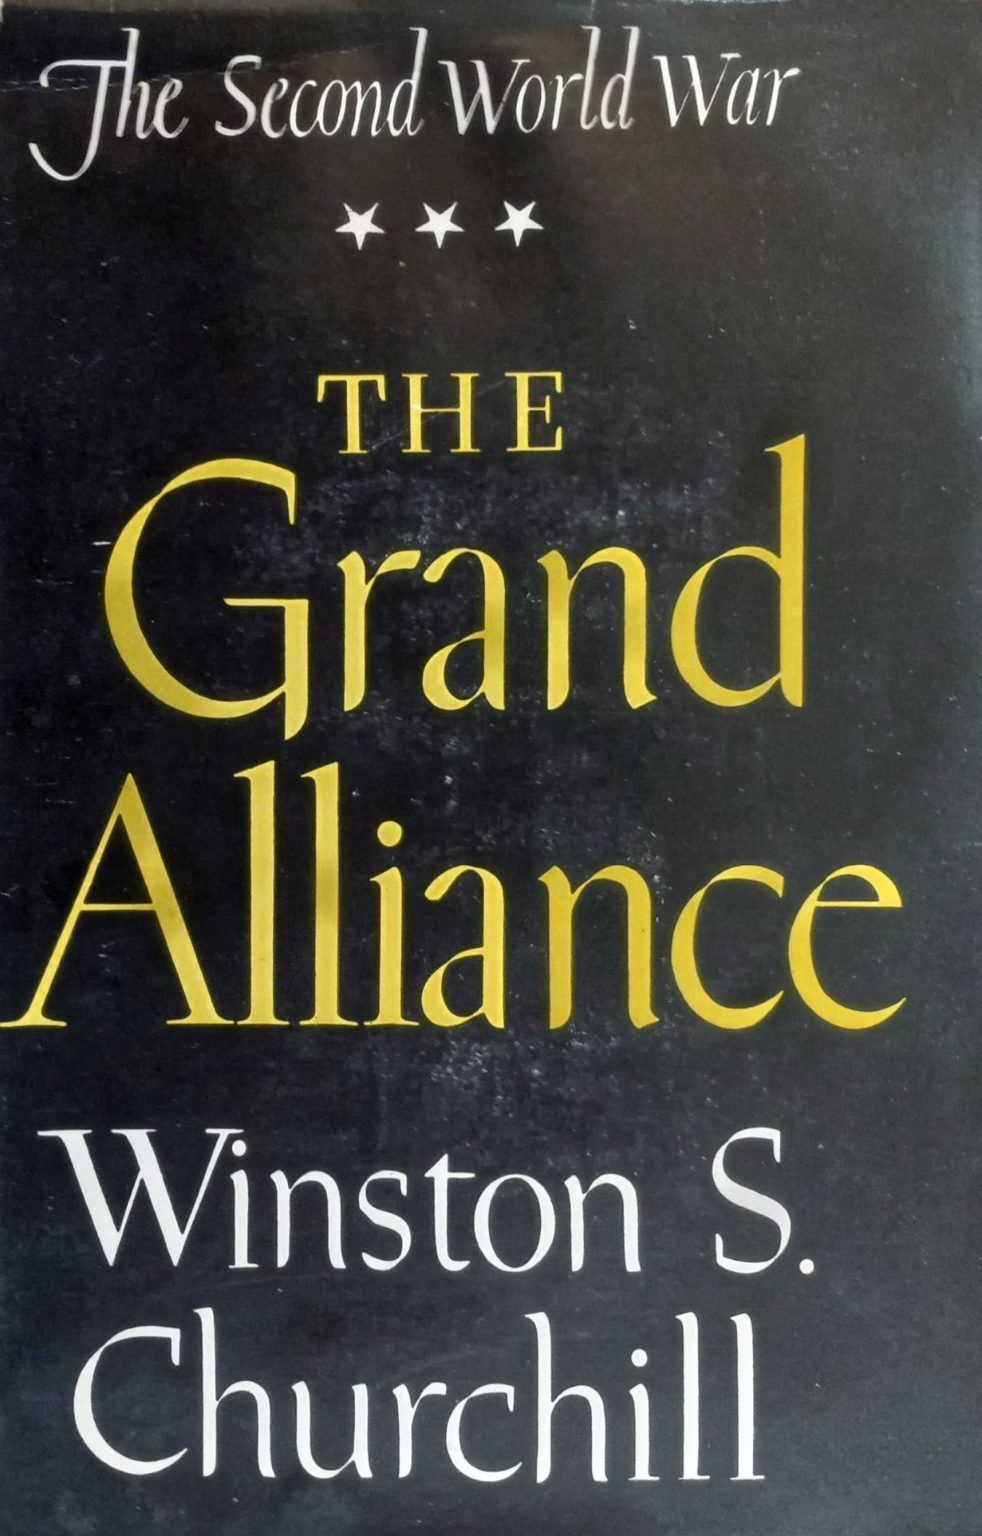 THE SECOND WORLD WAR: Volume III The Grand Alliance